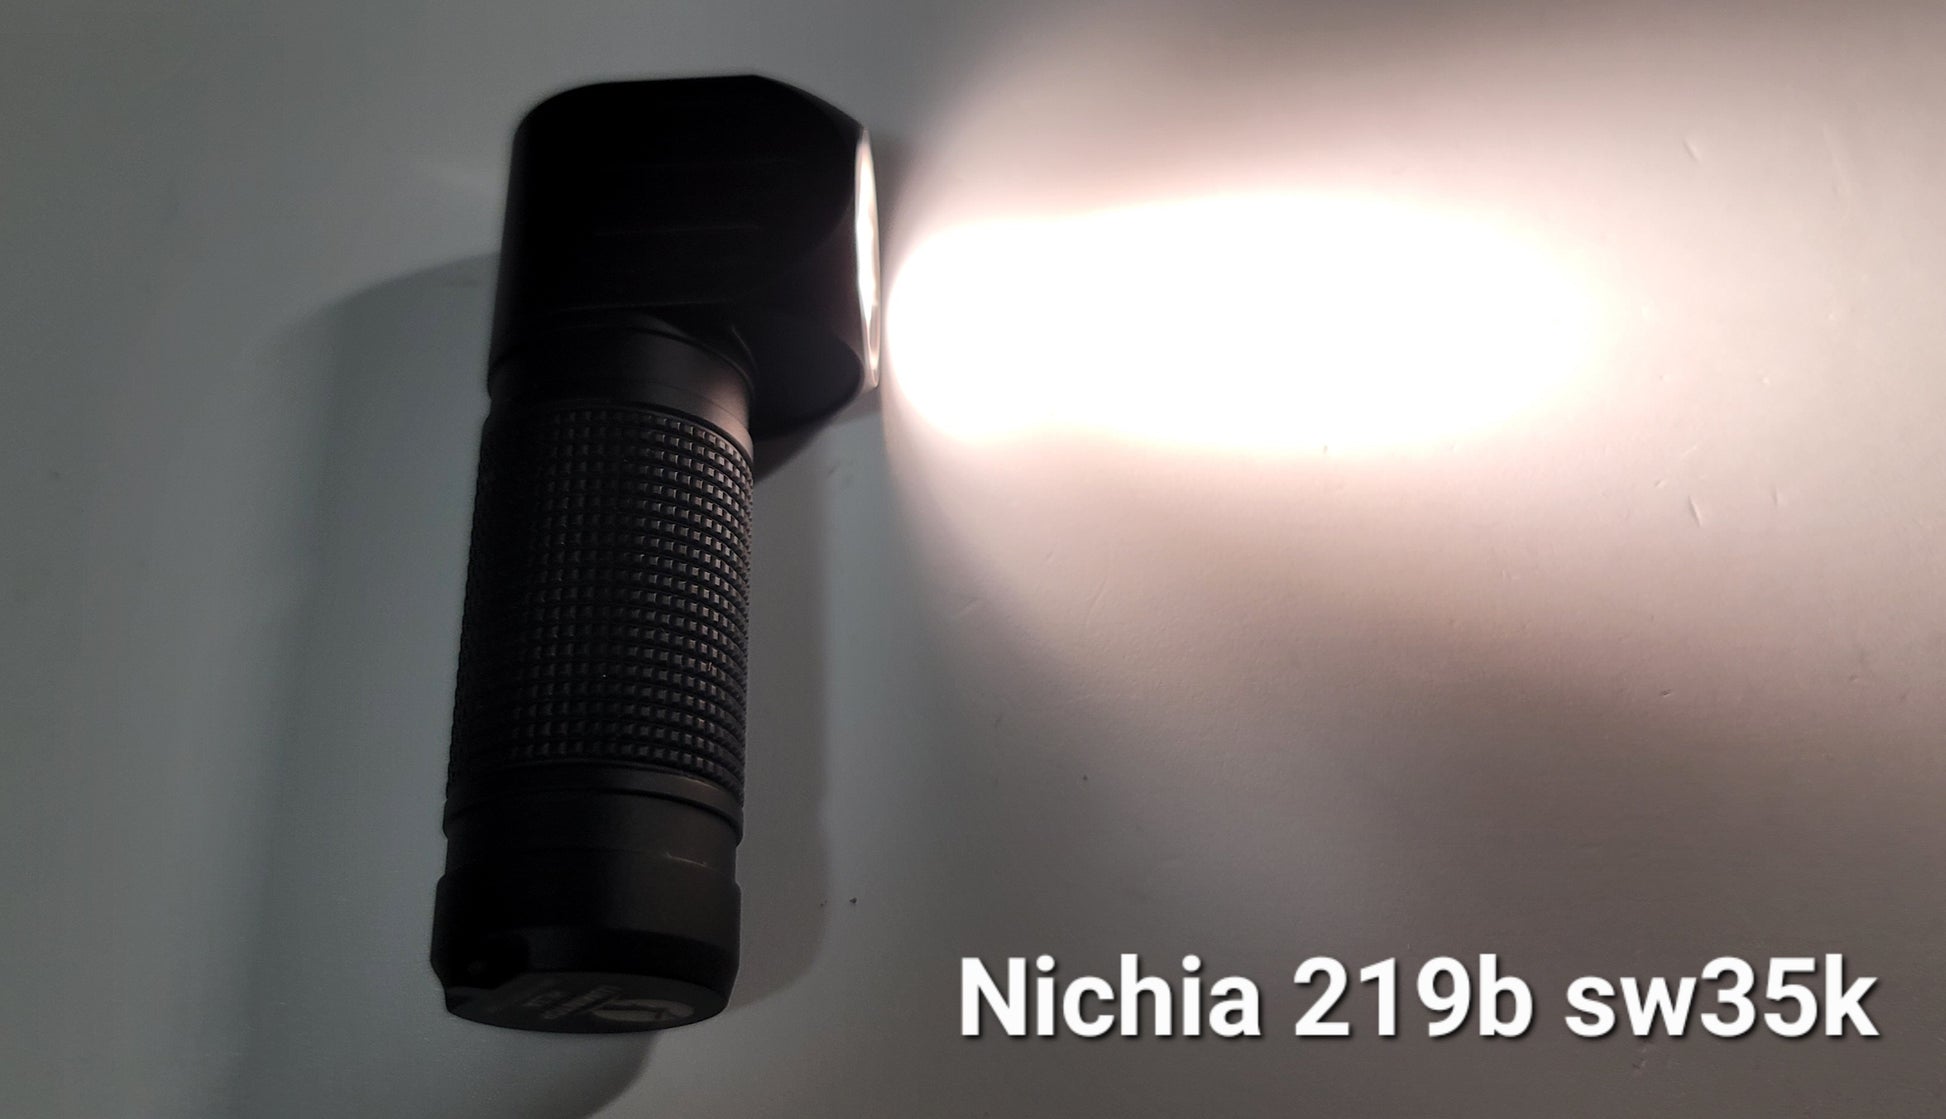 Lumintop HL3A Custom Anduril 2 UI Compact Led Headlamp Handheld LED Flashlight